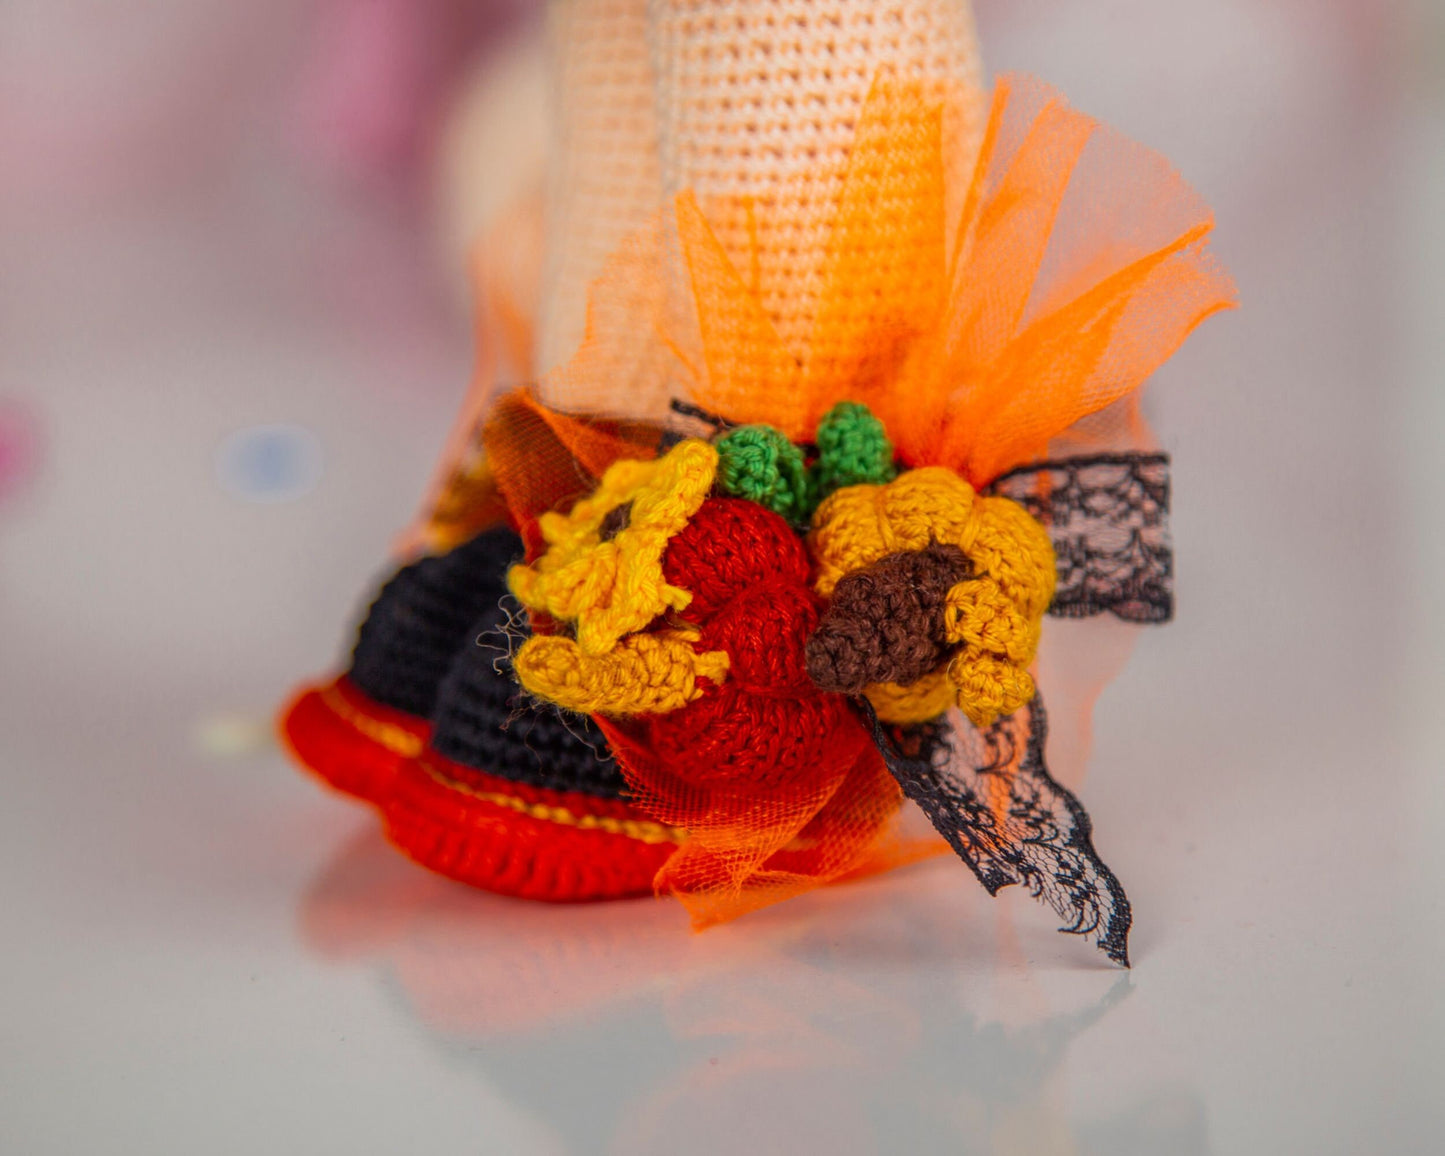 Redhead Amigurumi Doll, Cute Handmade Crochet Doll, Halloween Gift for Daughter